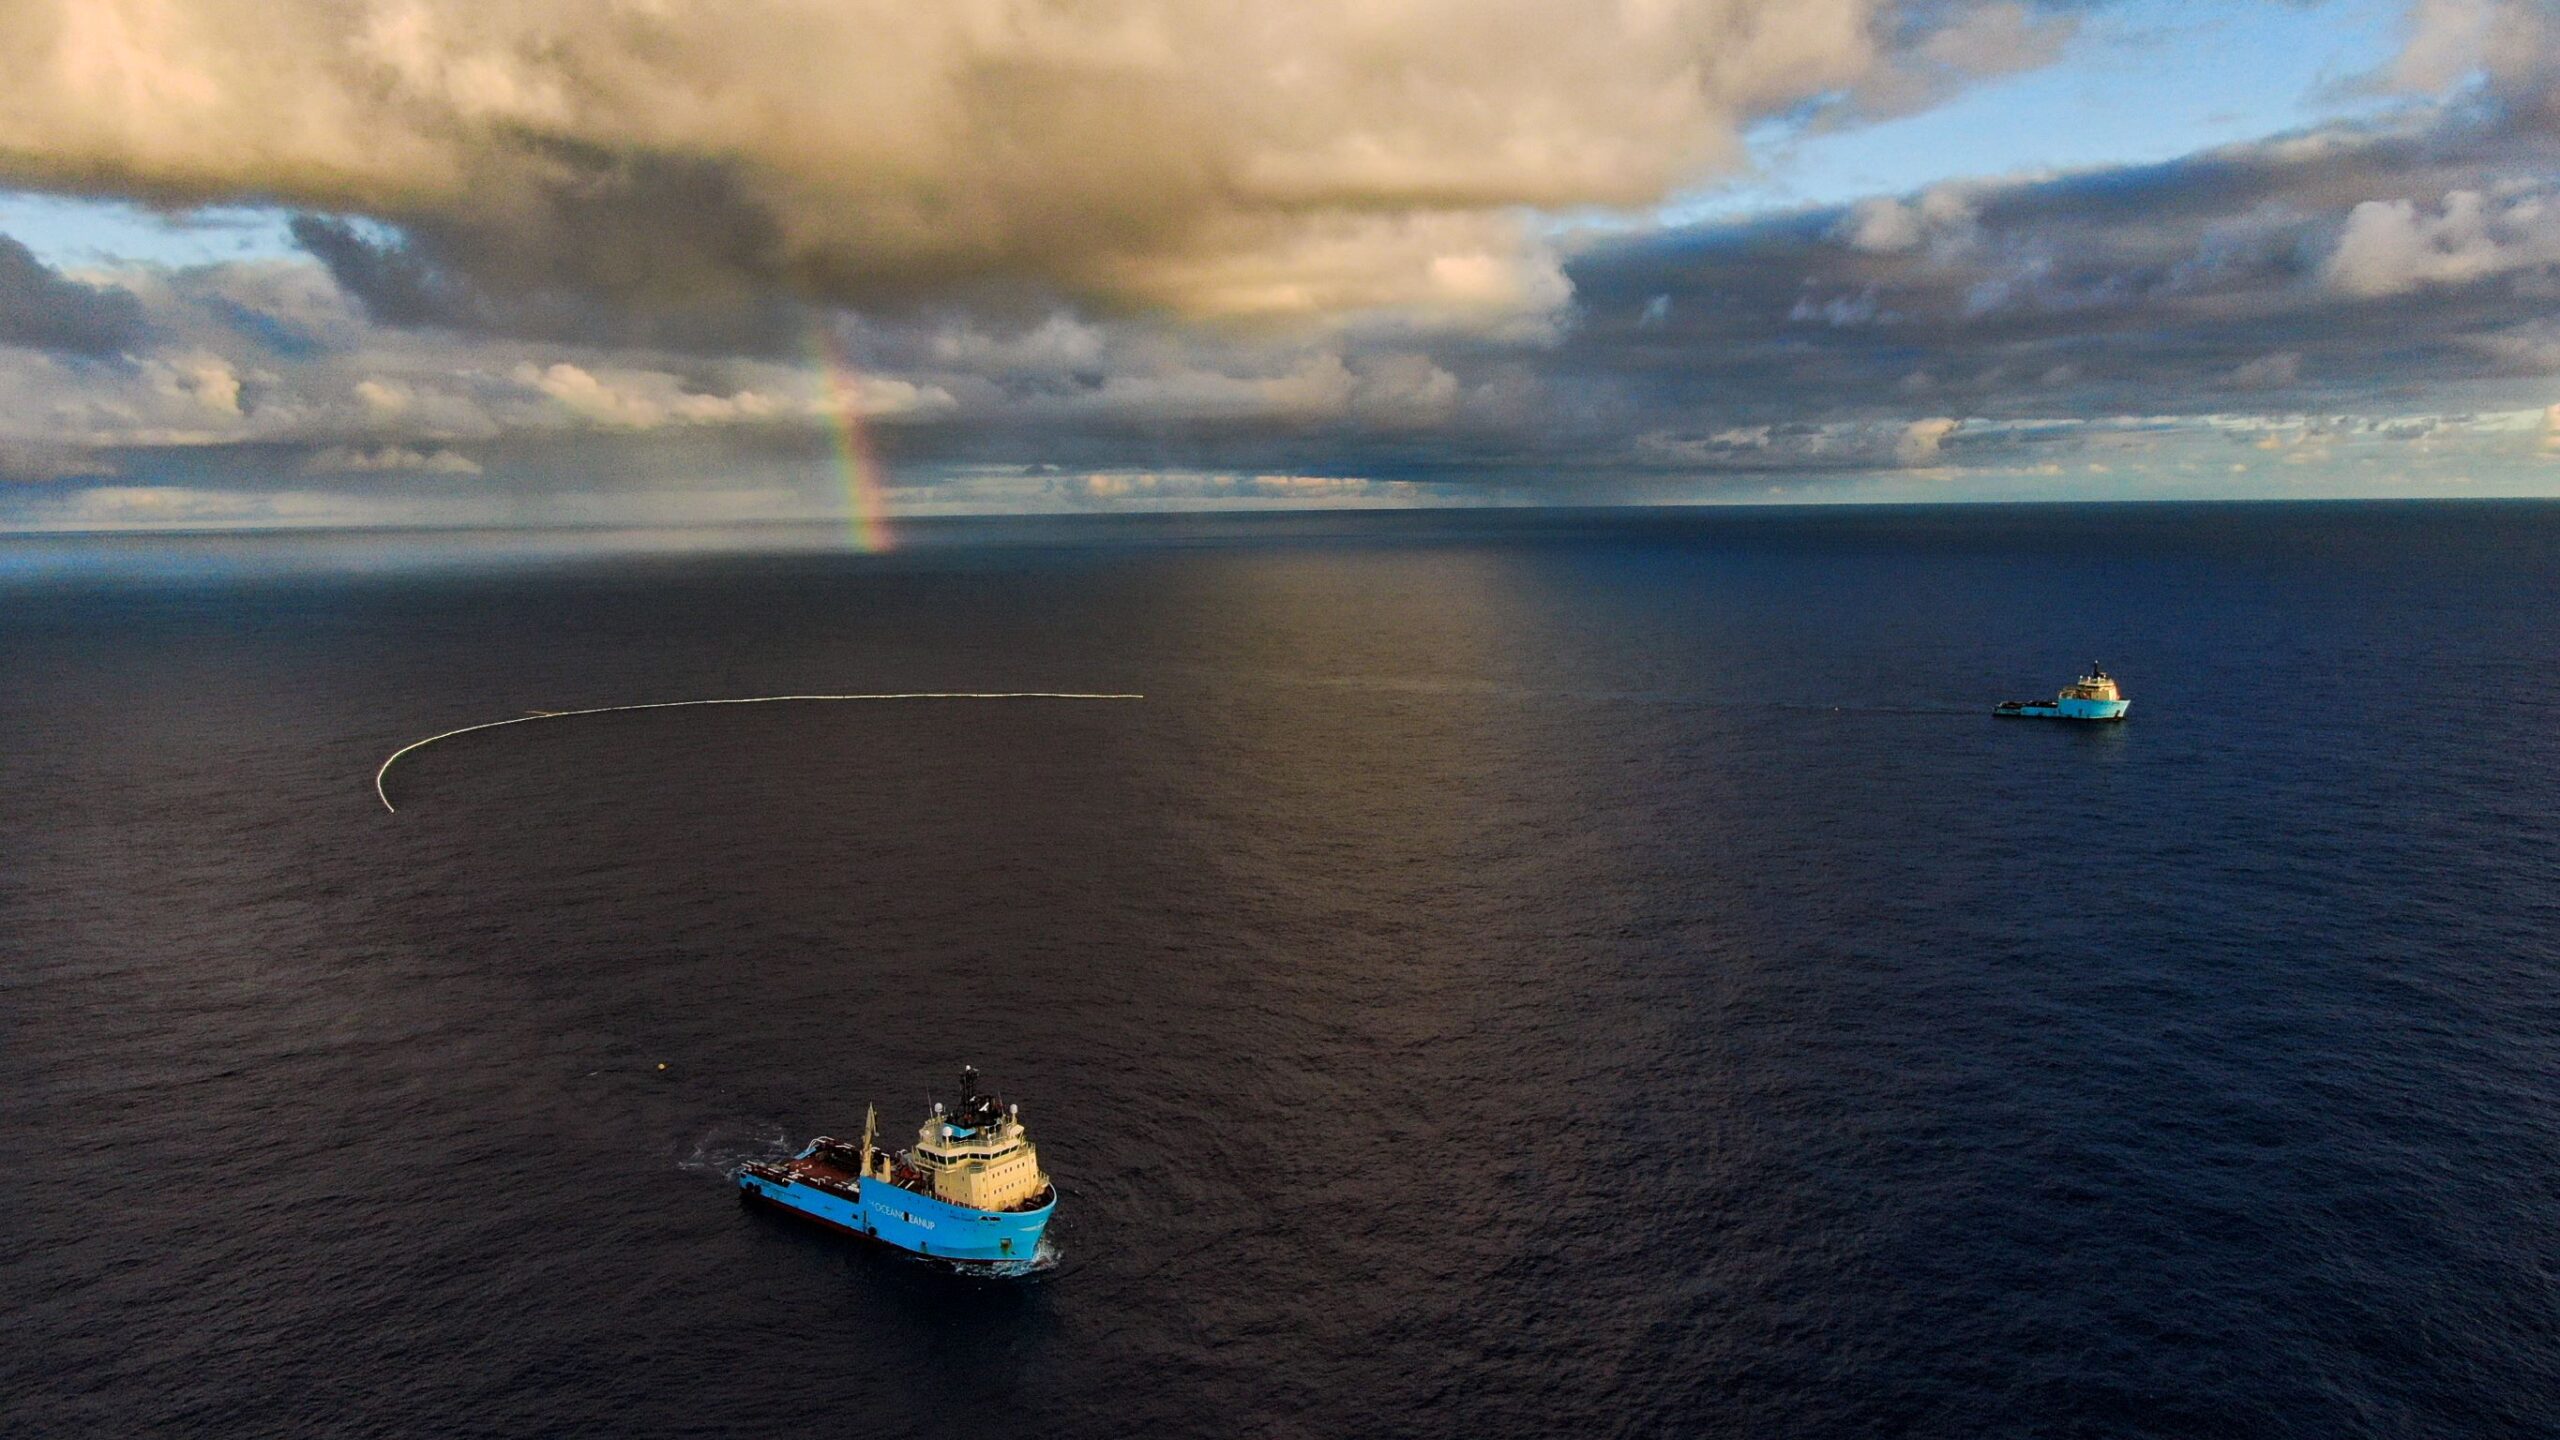 Maersk Tender with rainbow